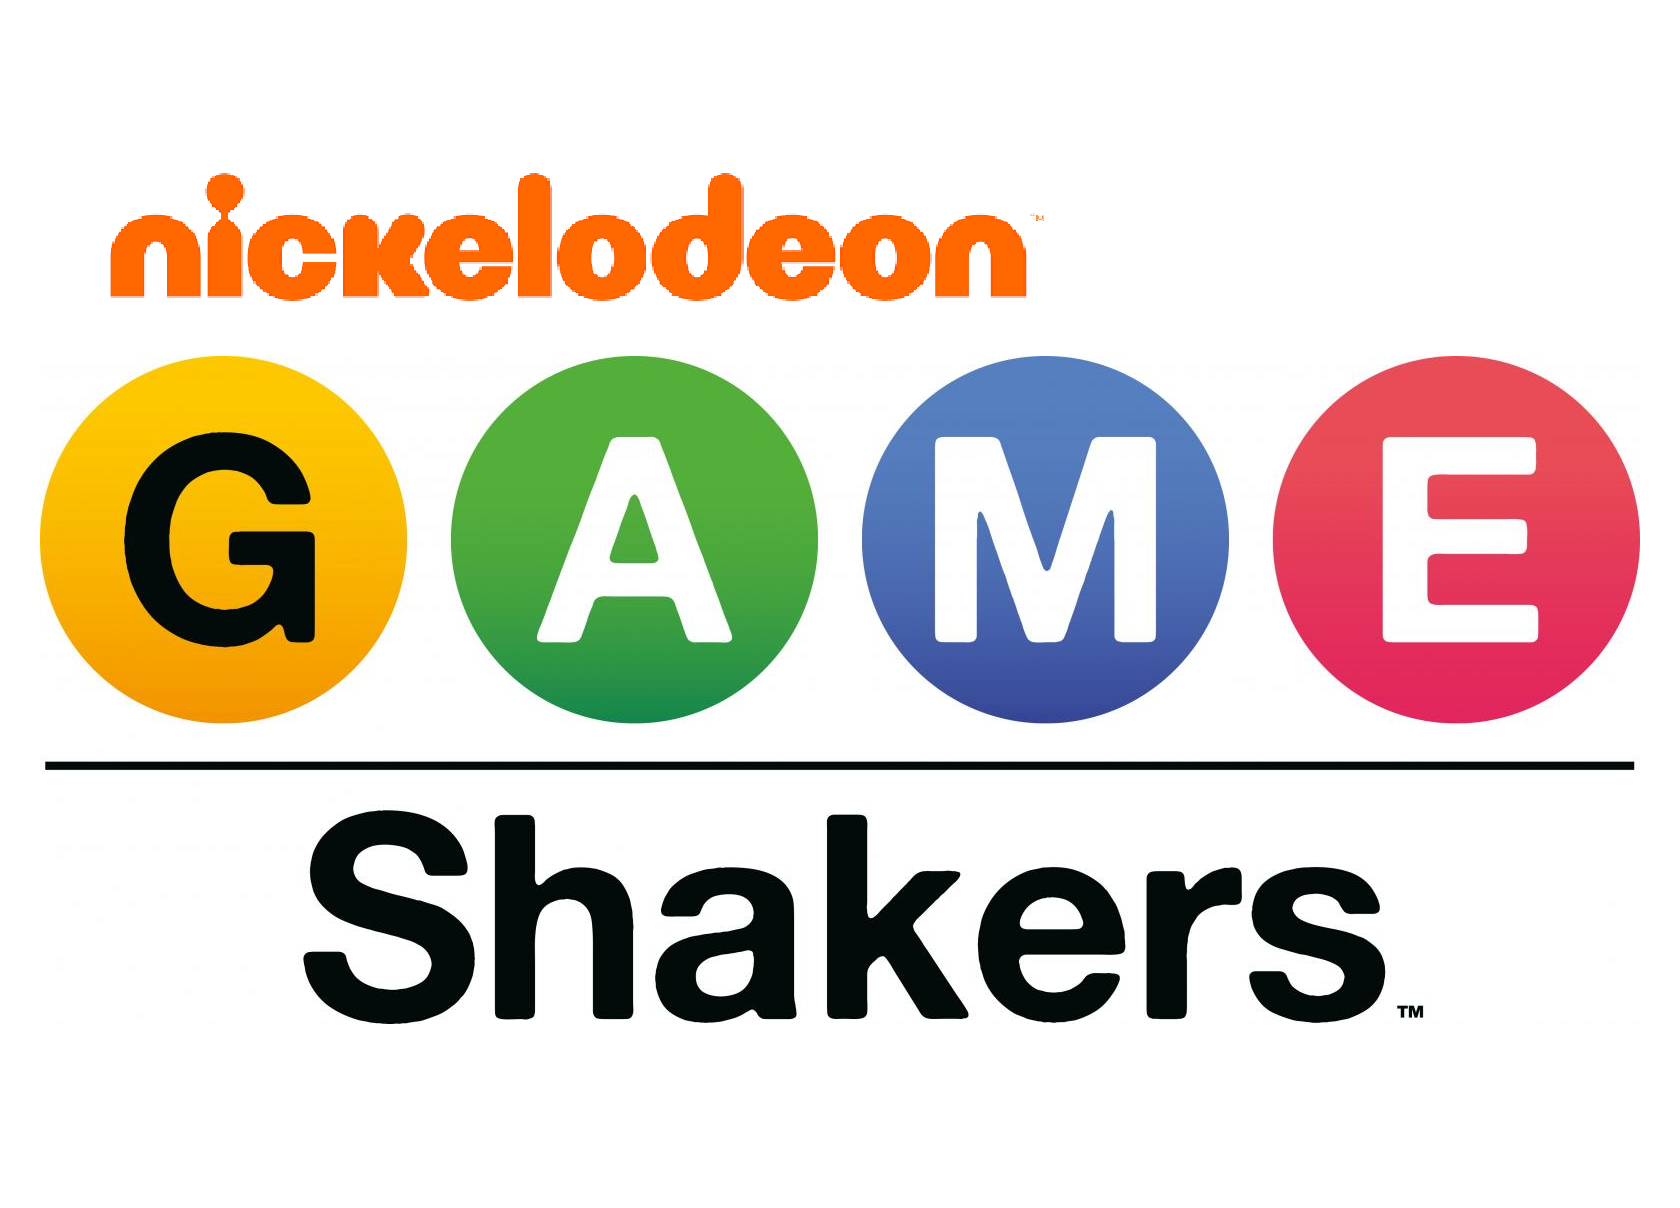 Game Shakers - Wikipedia